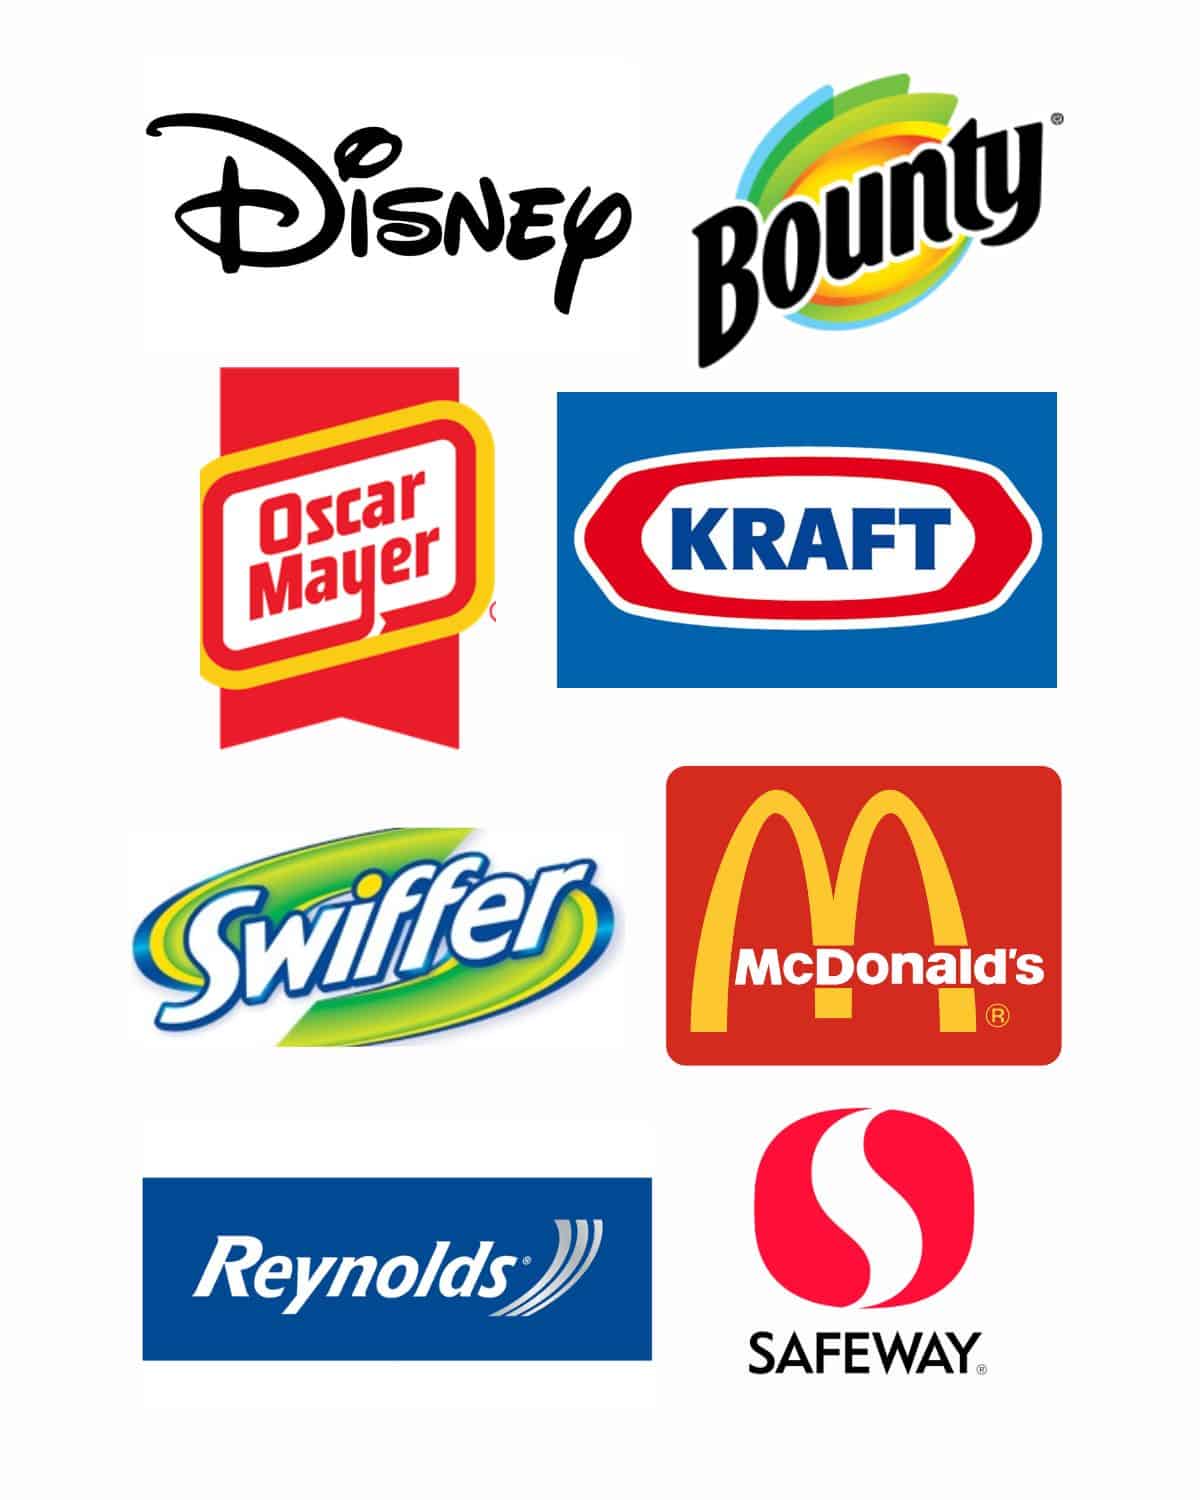 collage of business logos such as Disney, Bounty, Oscar Mayer, Kraft, Swiffer, McDonald's, Safeway and Reynolds.